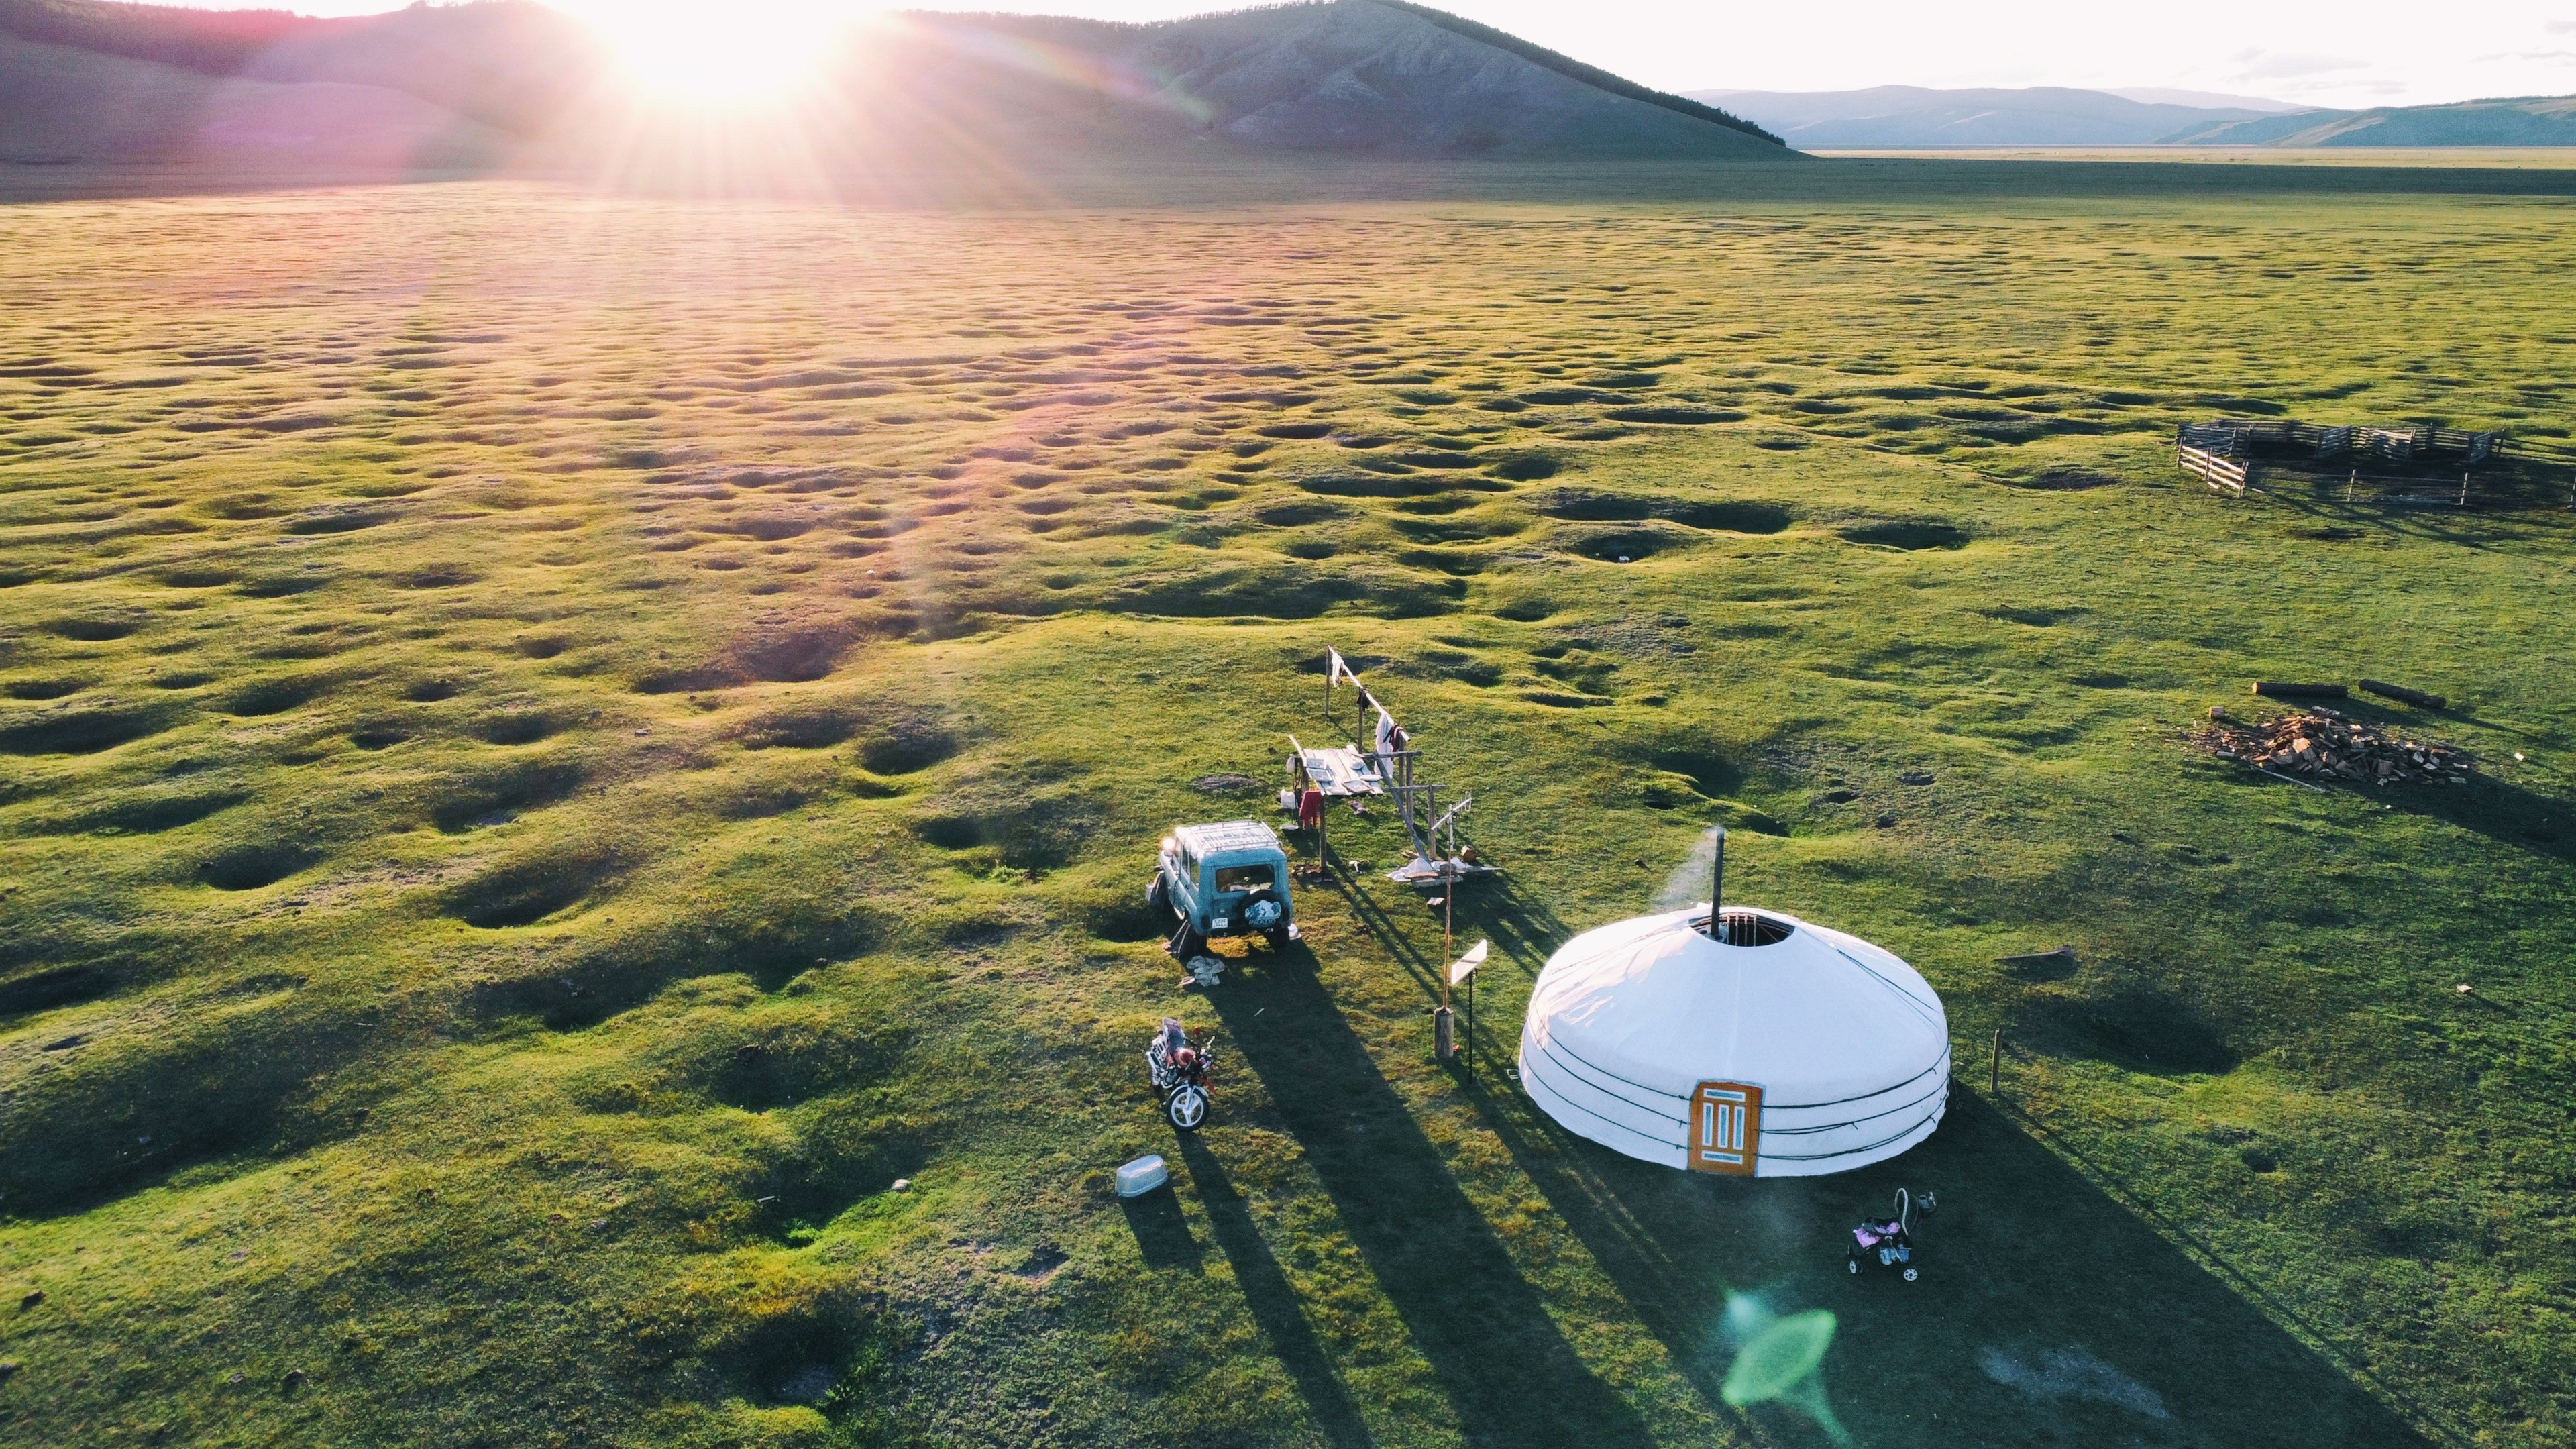 A modern yurt in Mongolia